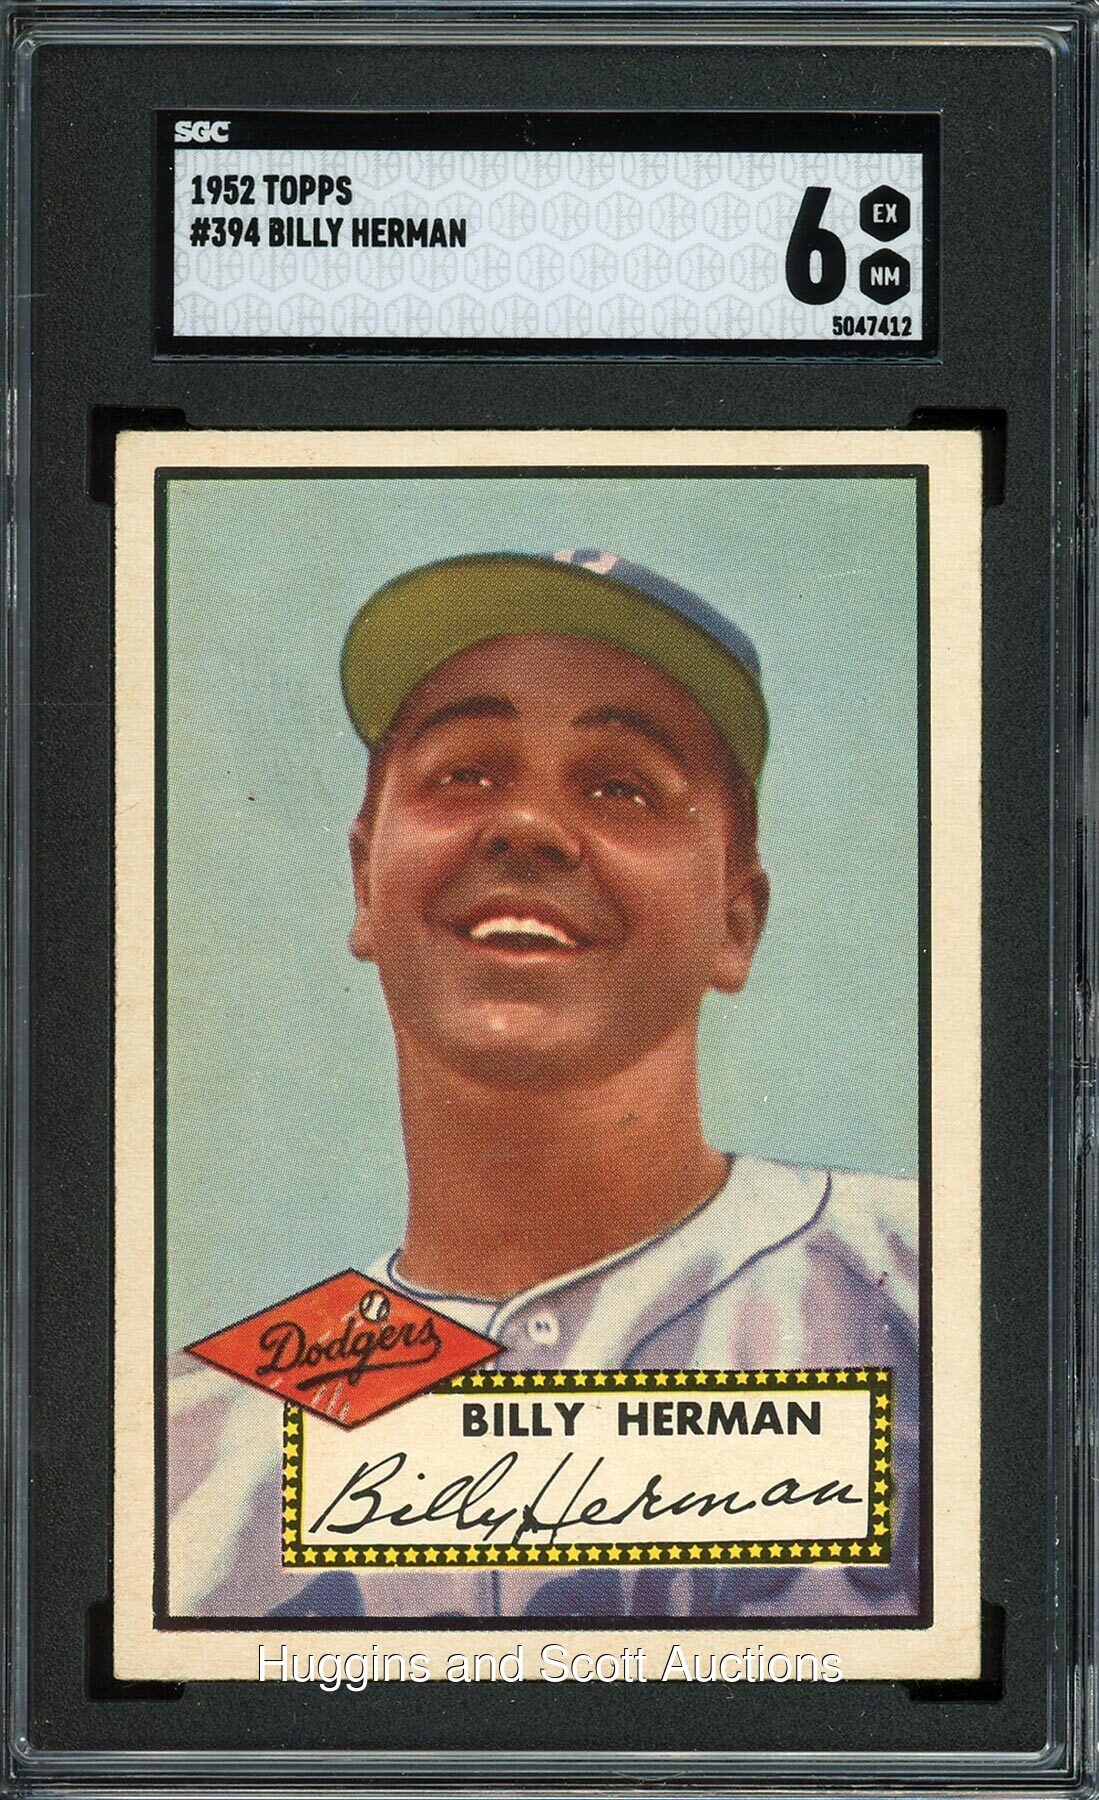 1952 Topps Baseball High Number #394 Billy Herman - SGC 6 EX/NM